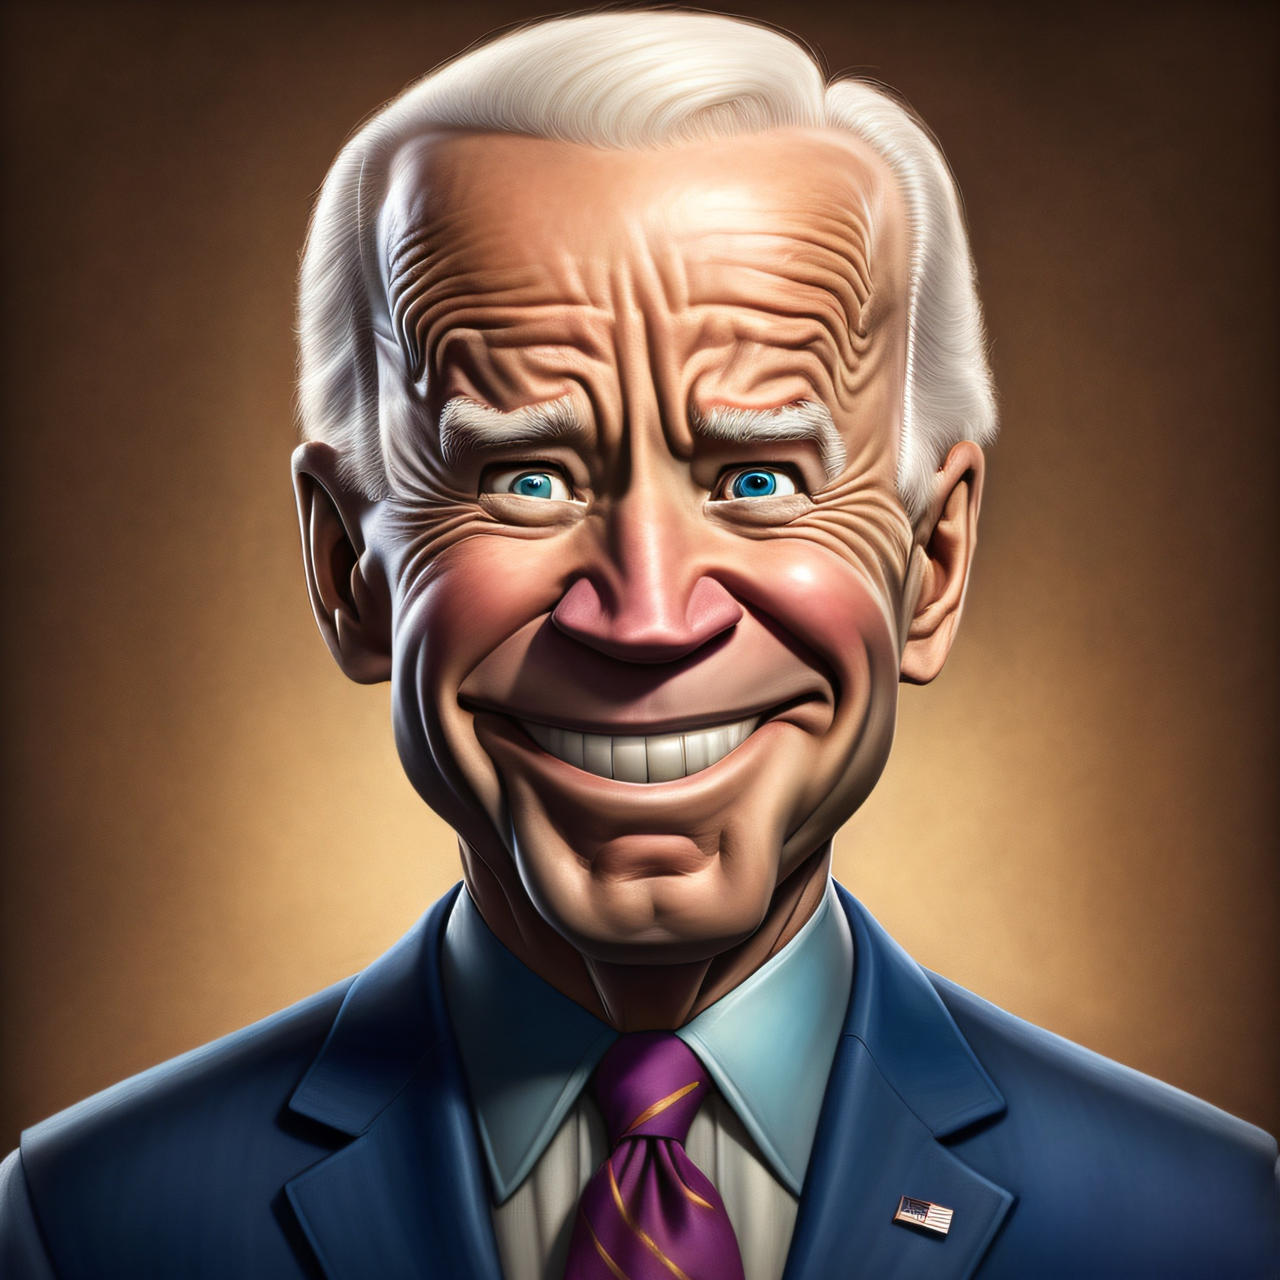 A whimsical caricature of Joe Biden by natali77 on DeviantArt